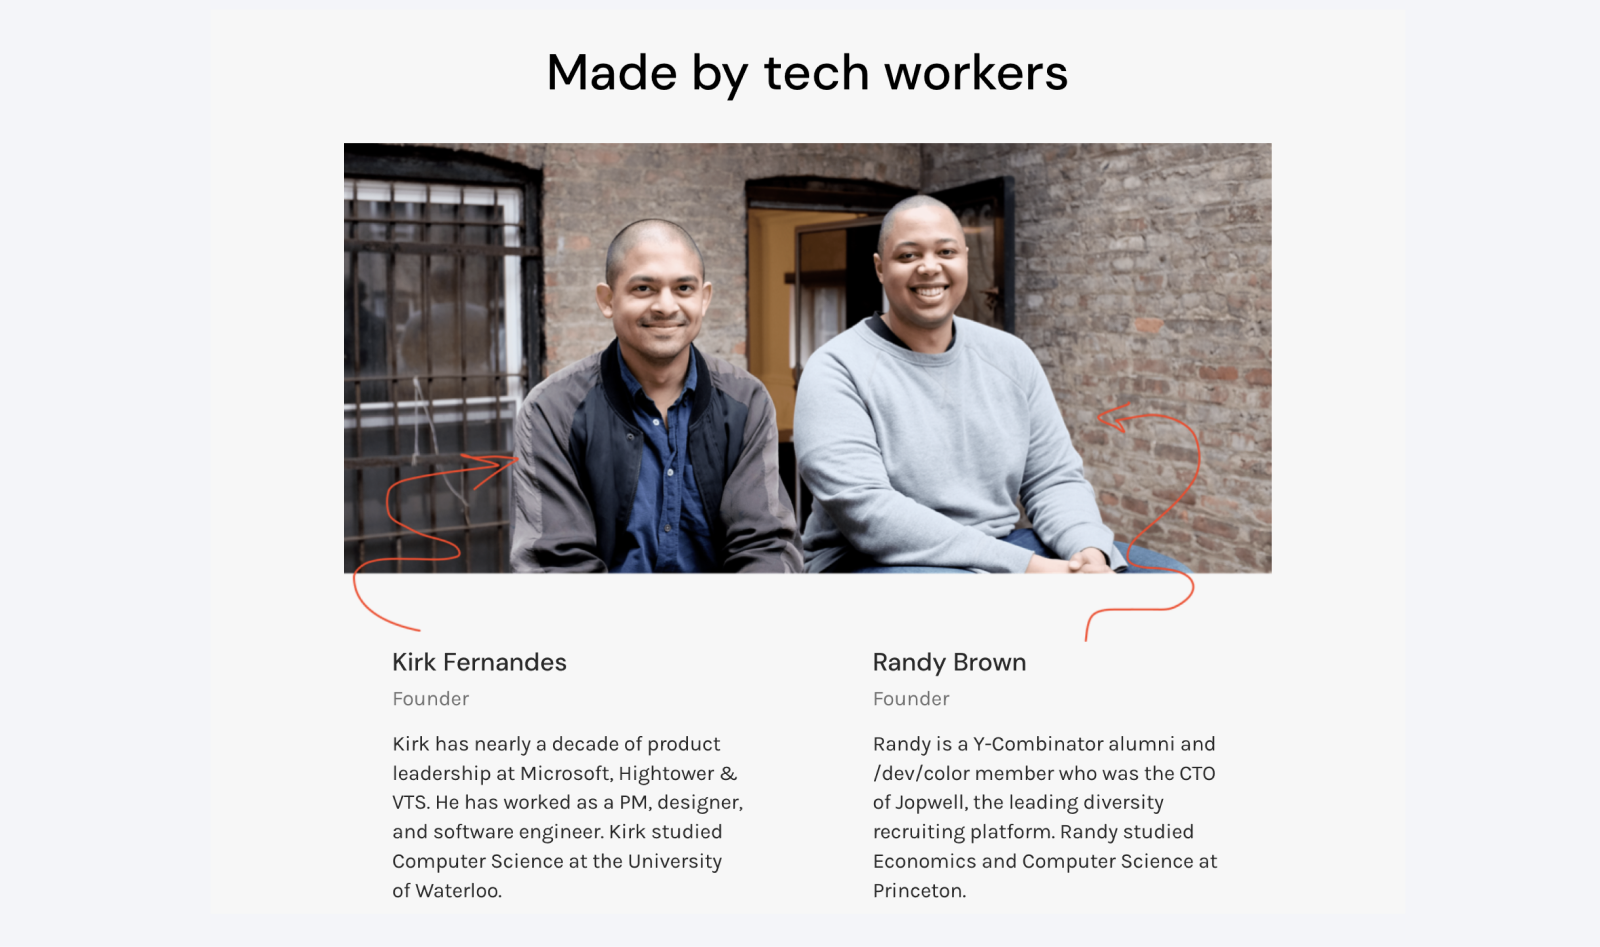 Screenshot of get-merit.com founders Kirk Fernandes and Randy Brown posing and lists their bio.